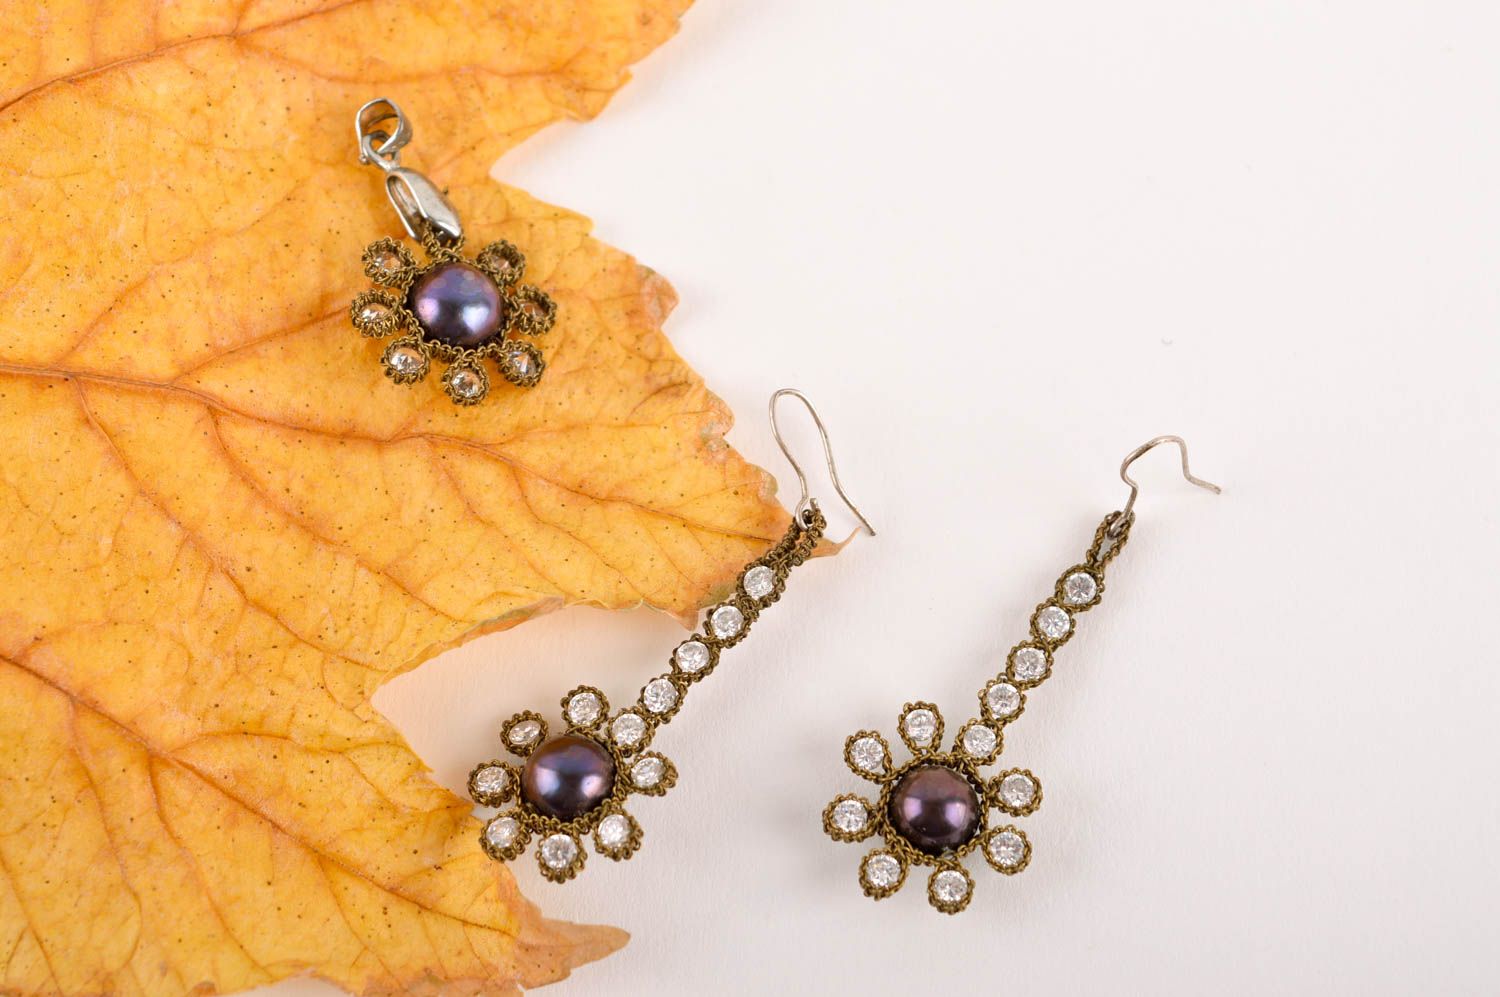 Handmade metal jewelry set metal earrings pendant necklace fashion trends photo 1